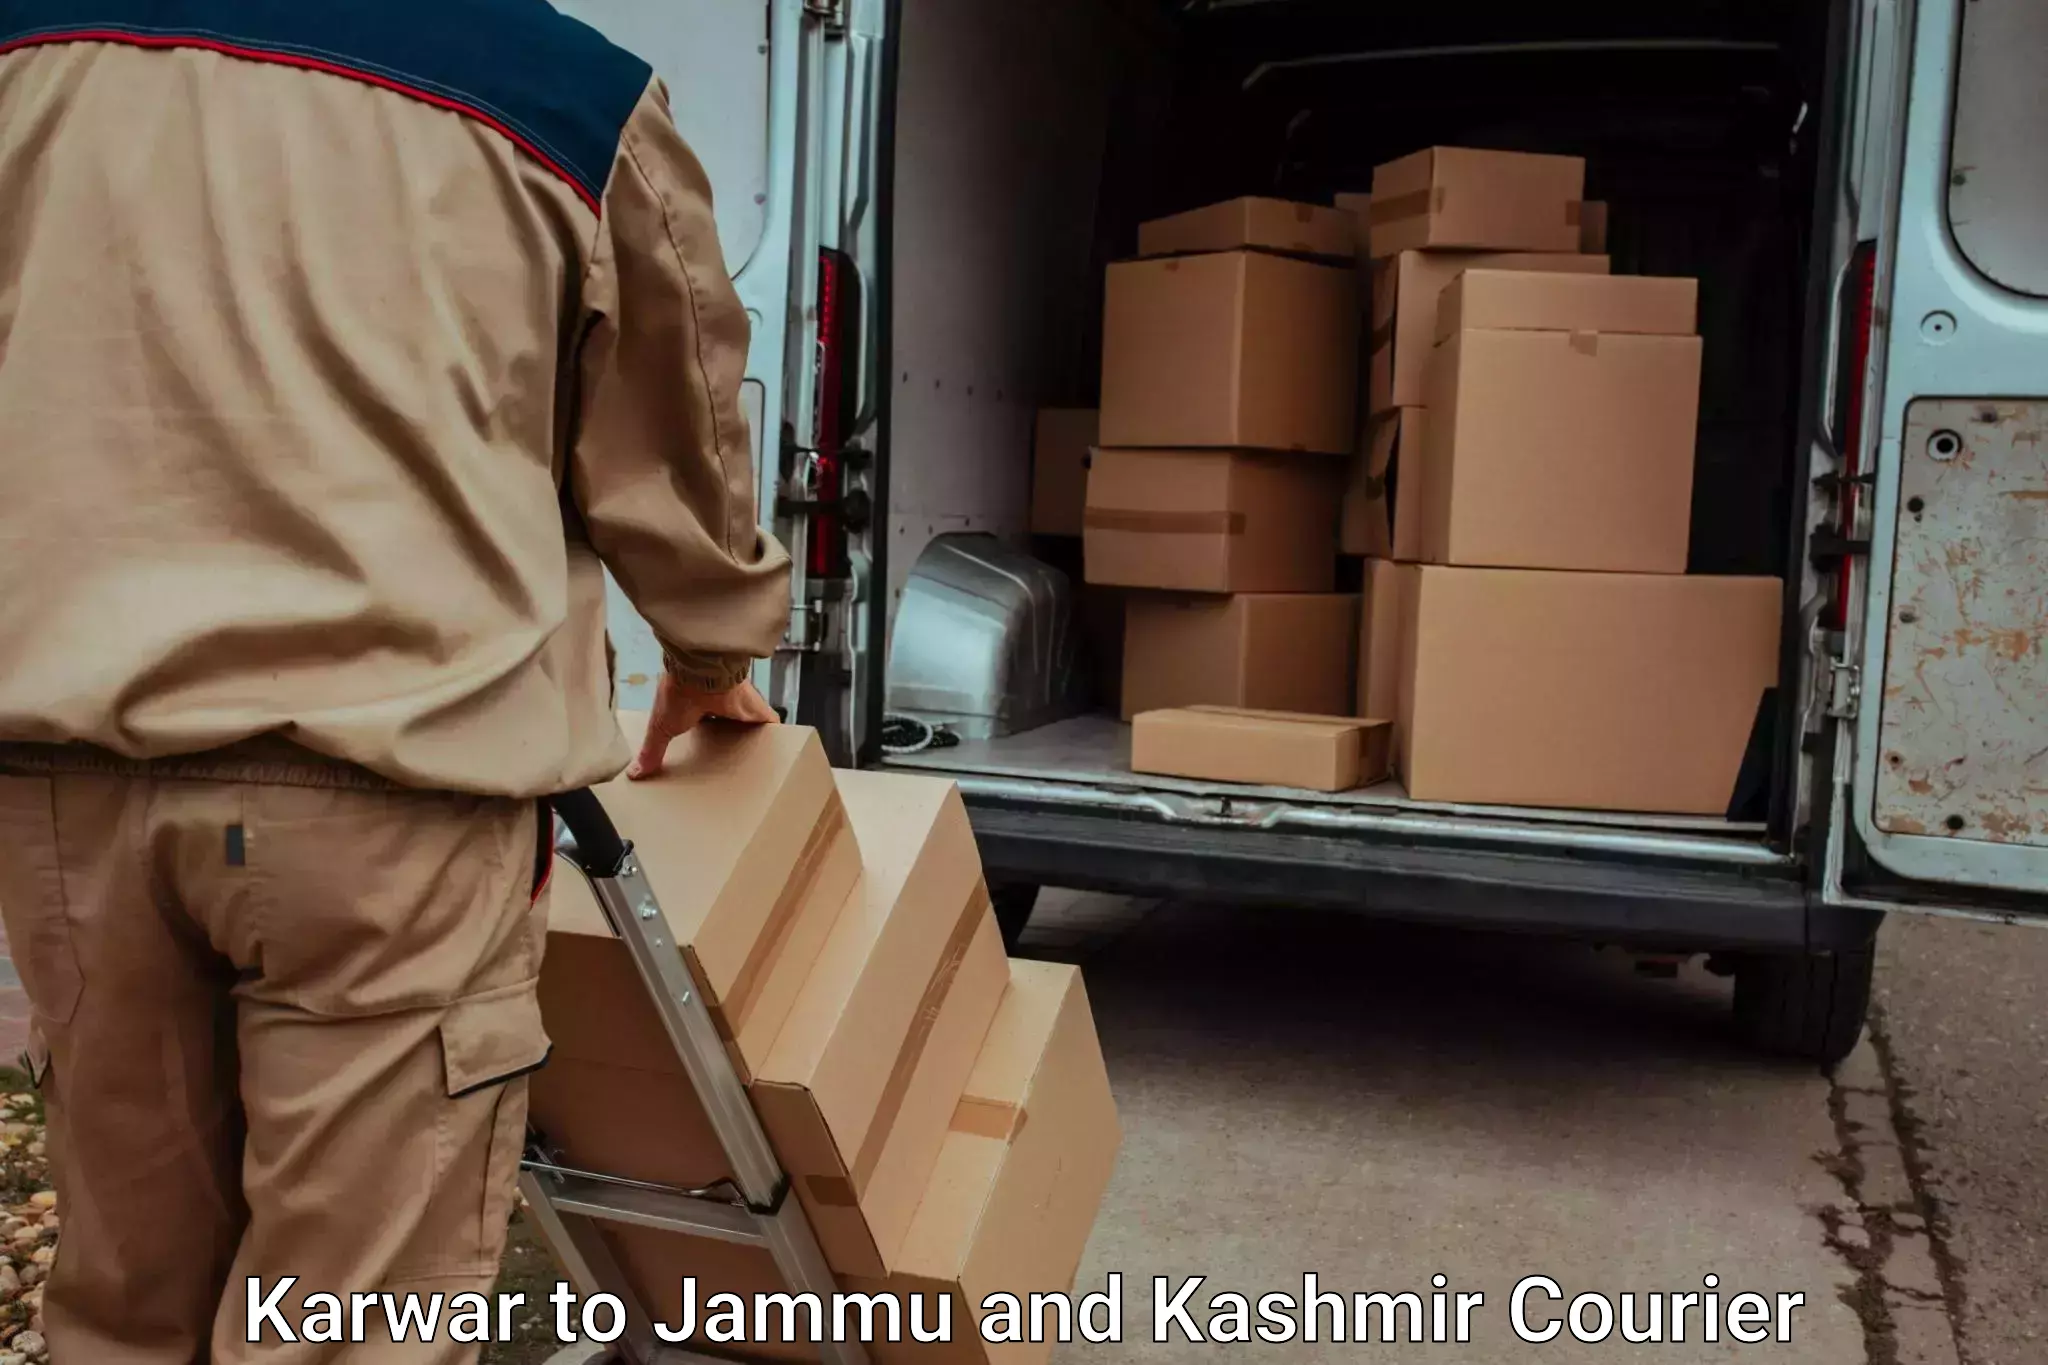 Luggage shipment specialists Karwar to Leh